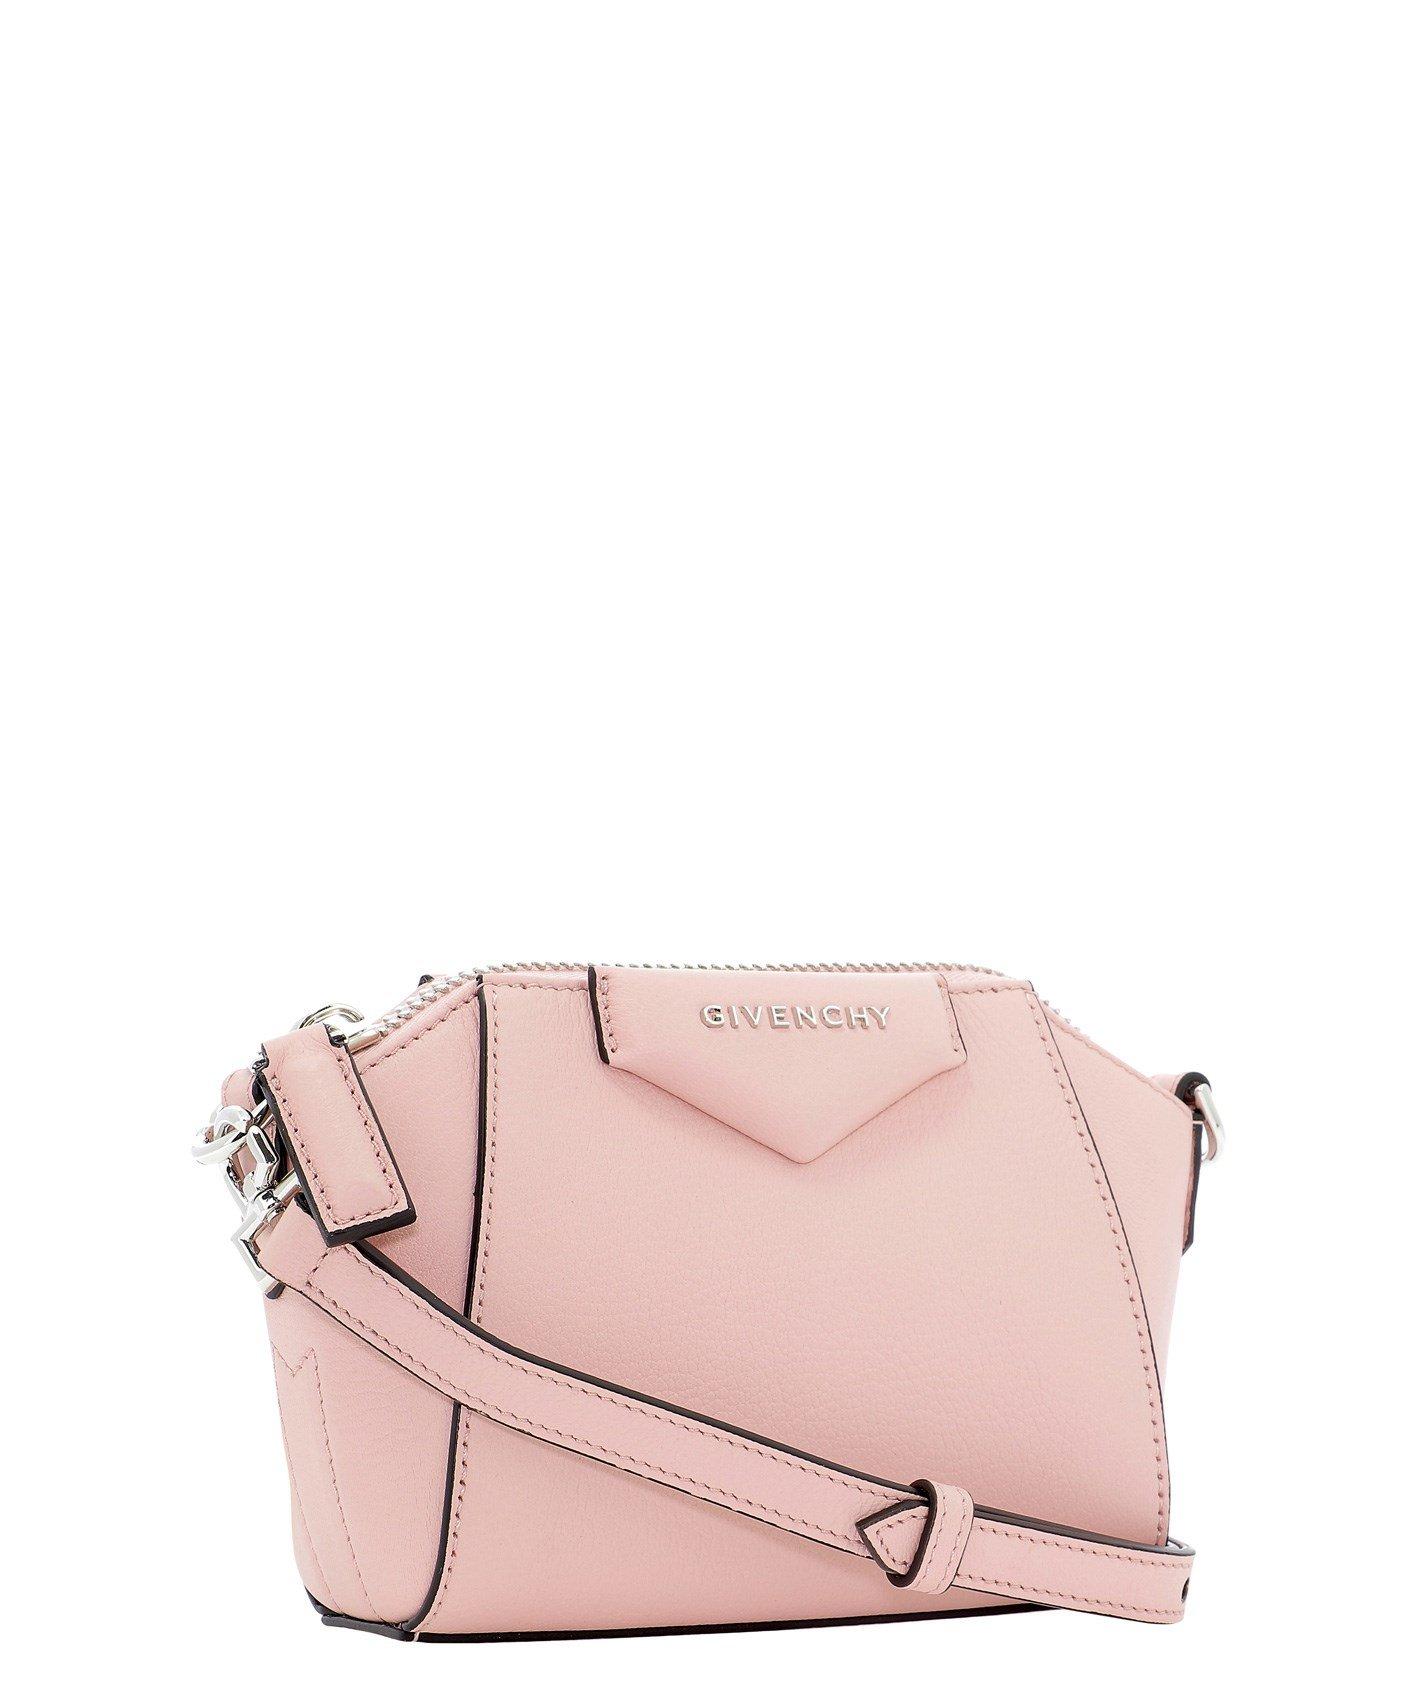 Givenchy Leather Antigona Nano Crossbody Bag in Pink - Lyst